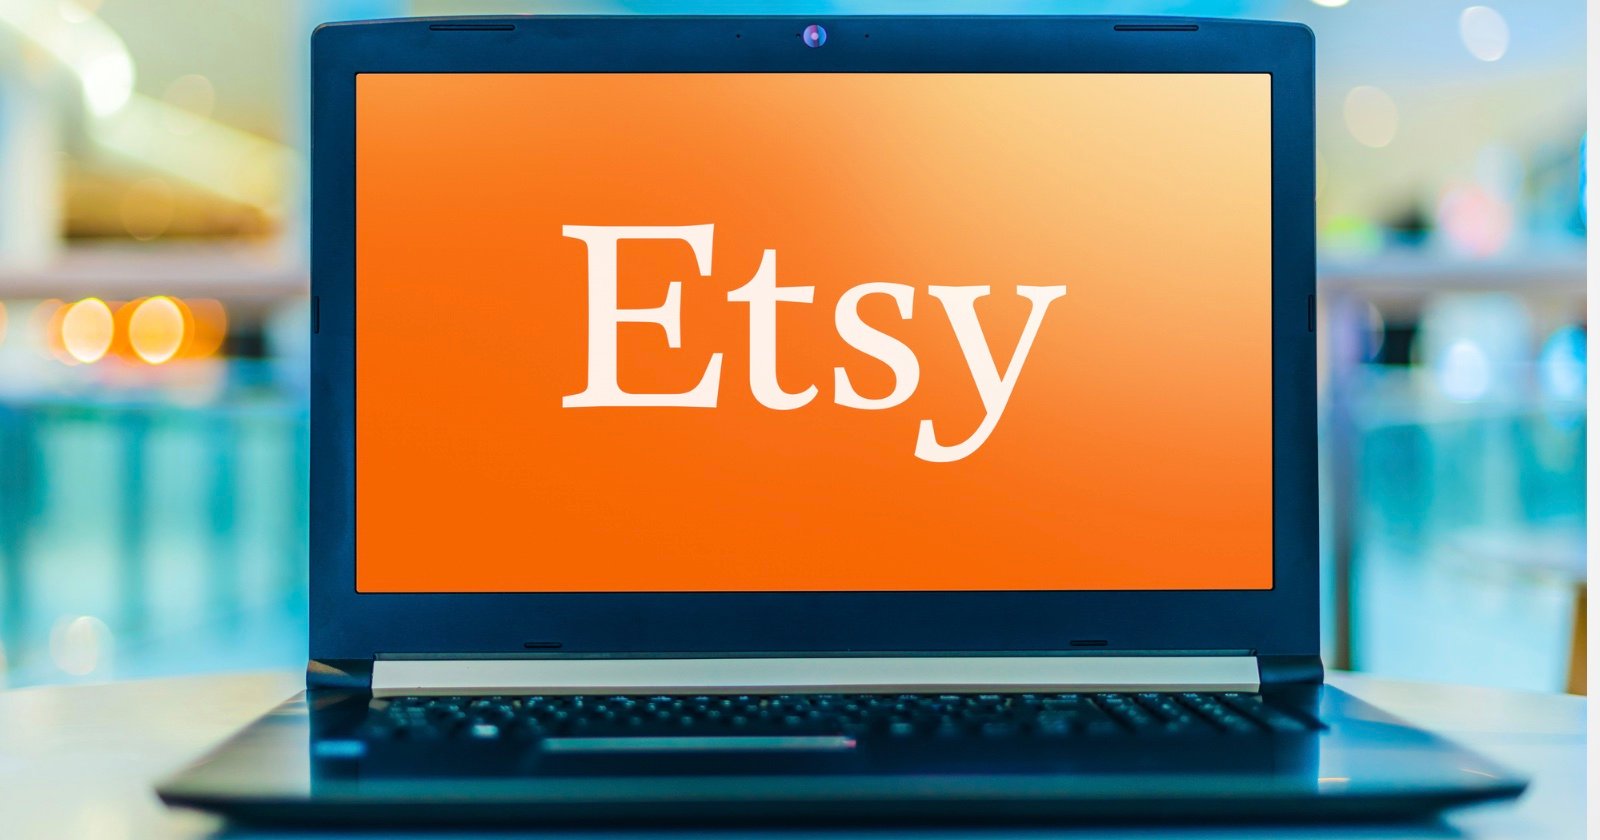  etsy has been selling deepfake pornographic celebrities 